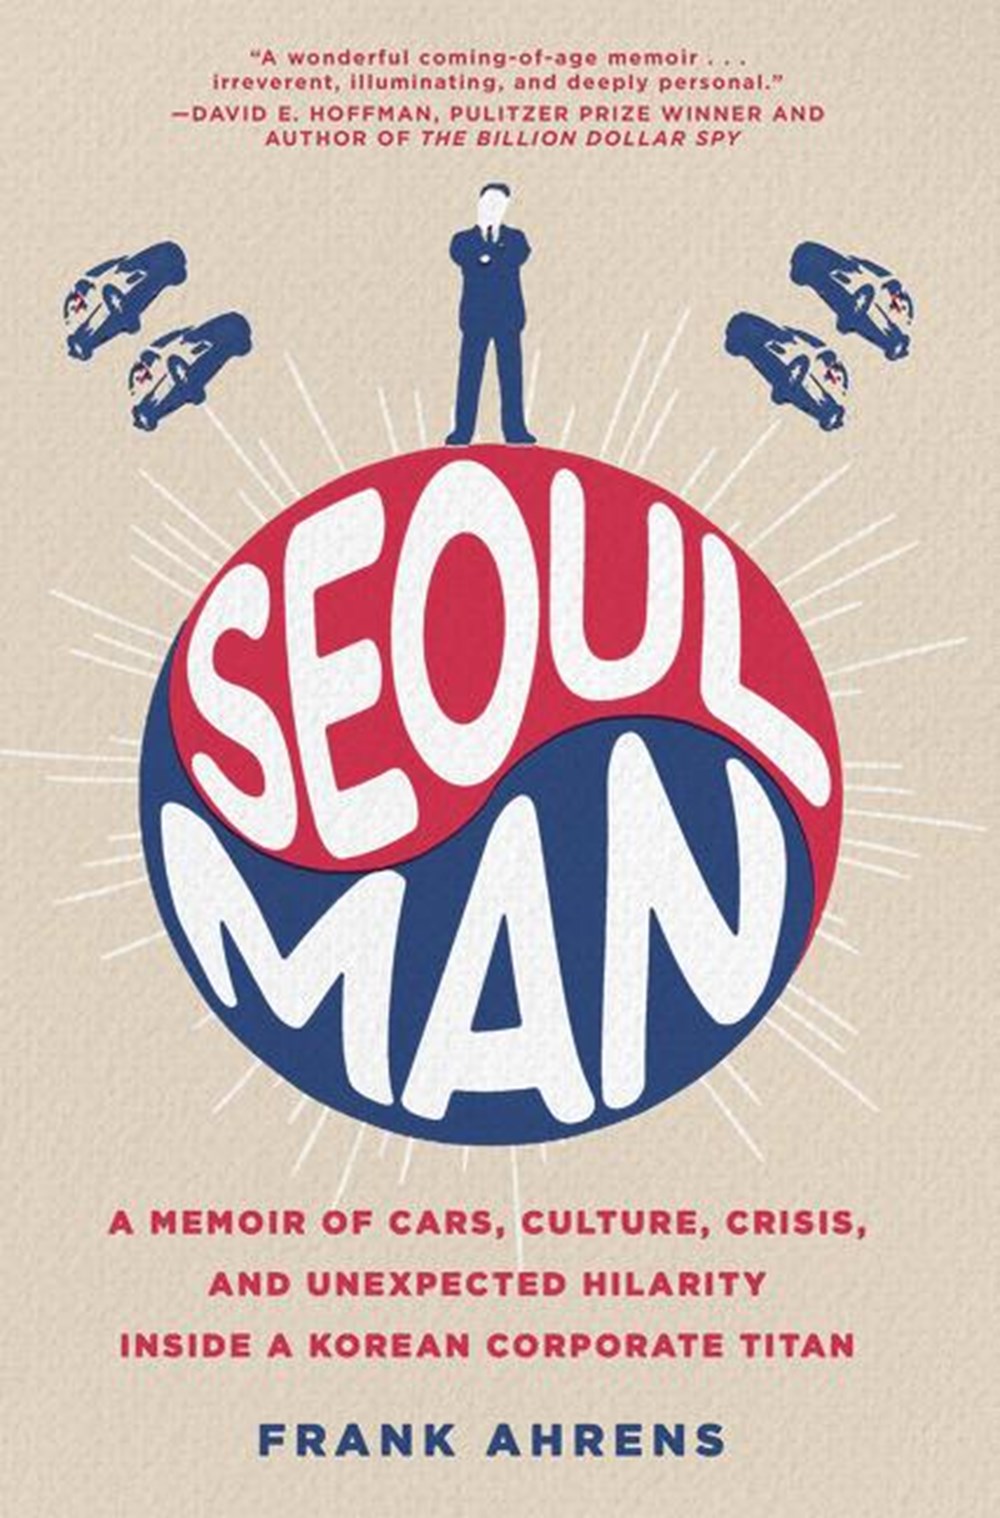 Seoul Man A Memoir of Cars, Culture, Crisis, and Unexpected Hilarity Inside a Korean Corporate Titan